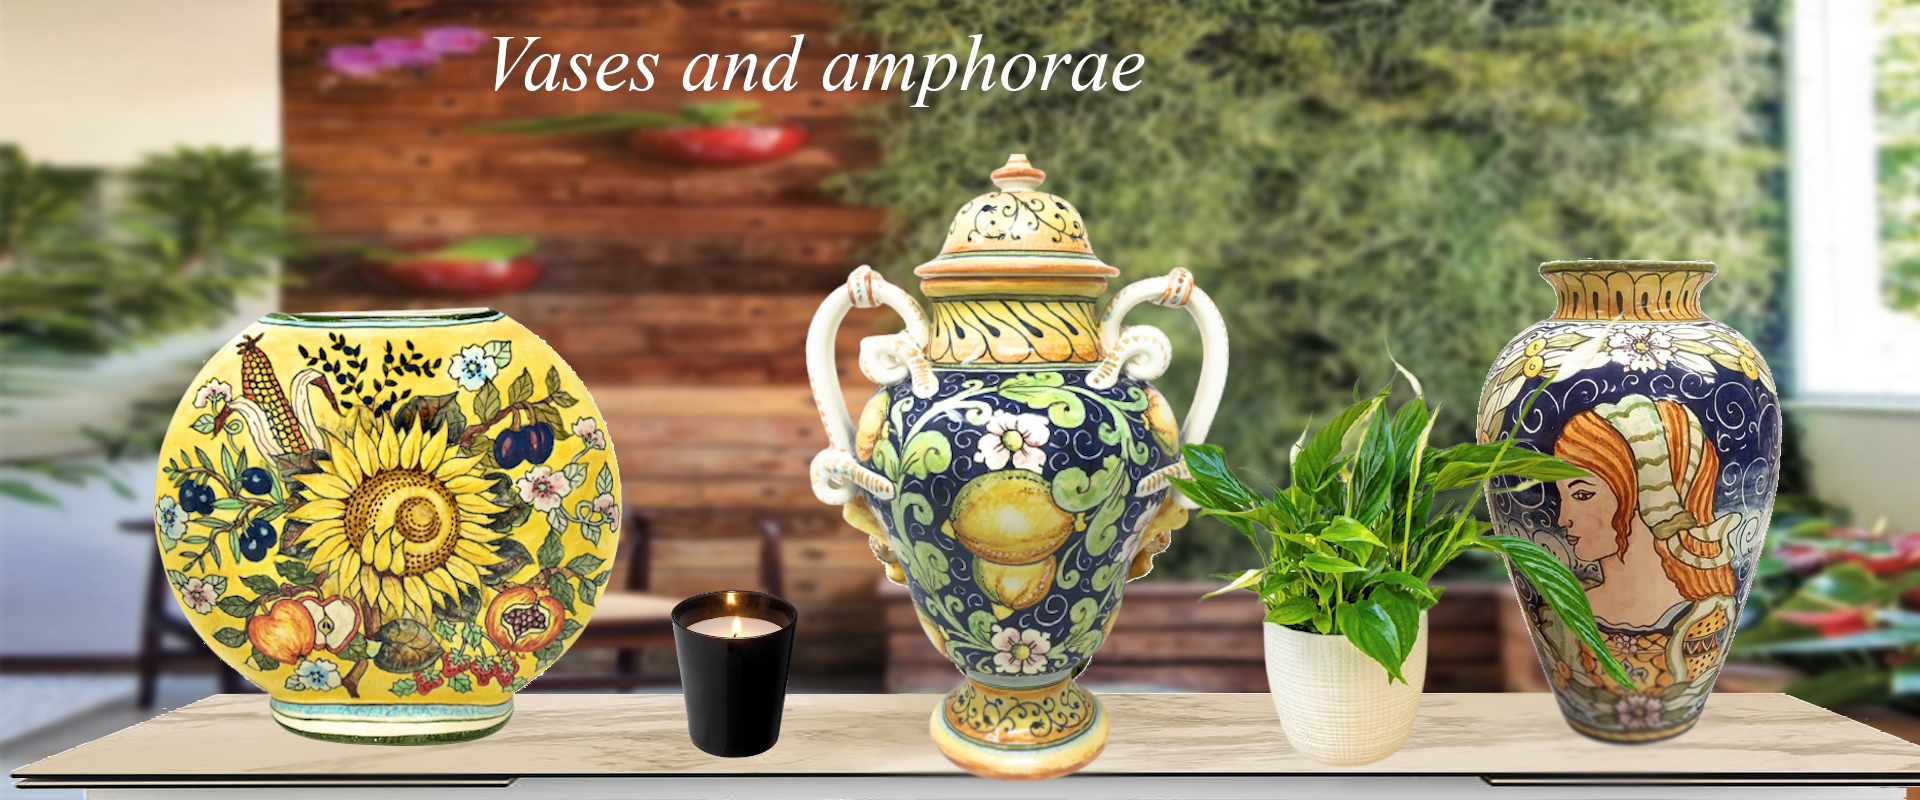 vases and amphorae